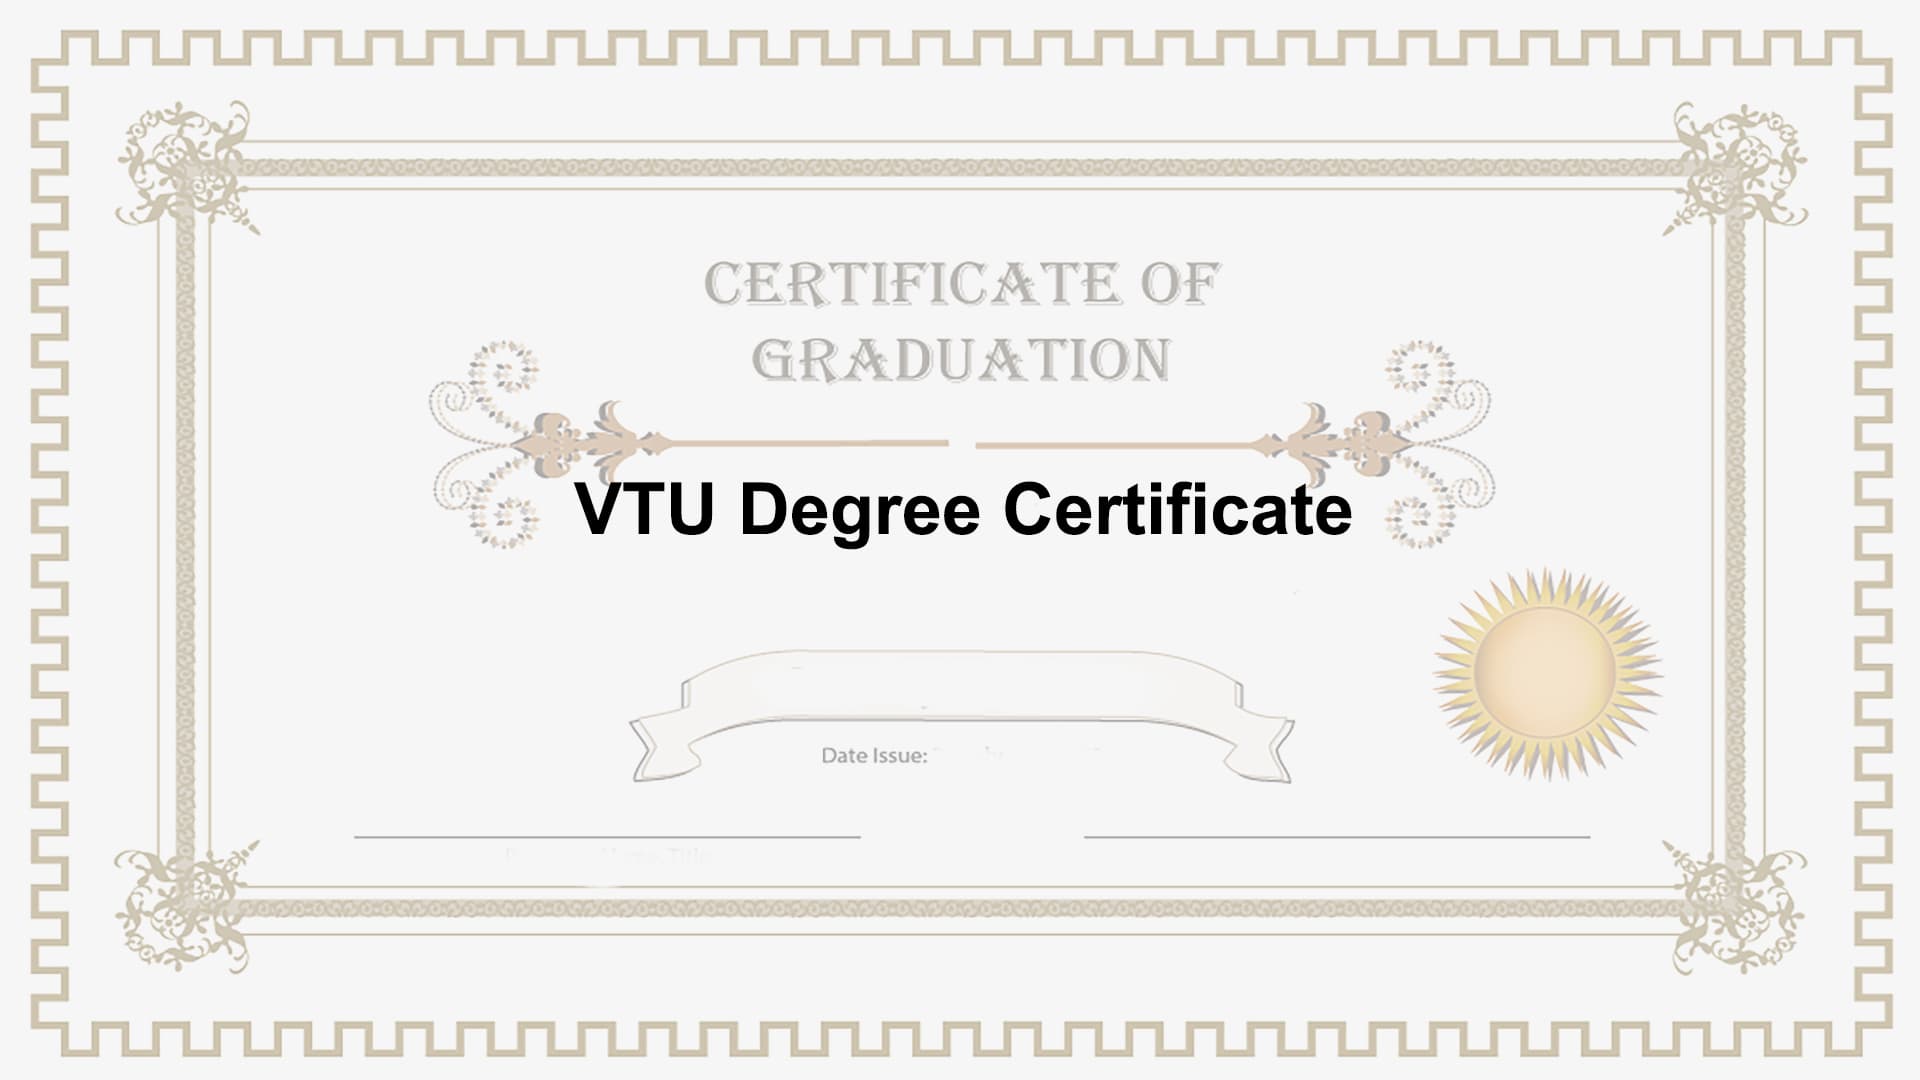 VTU Degree Certificate [Step by Step Procedure to Apply]